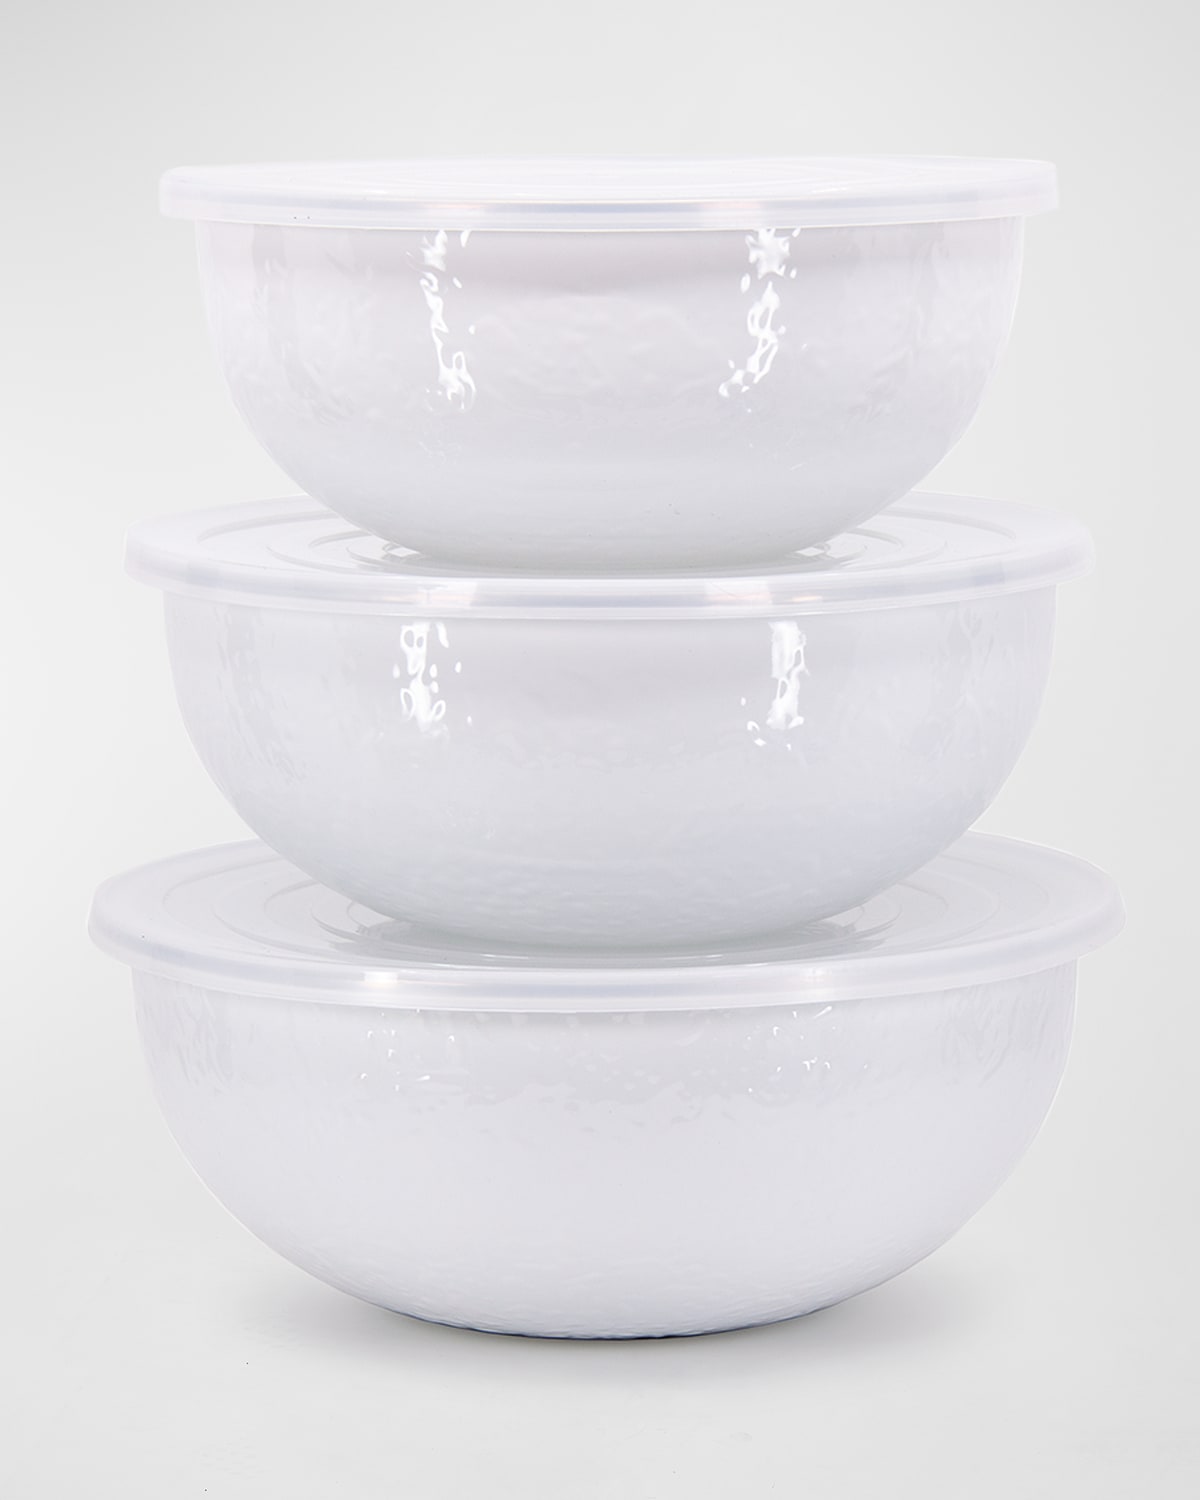 White Mixing Bowls